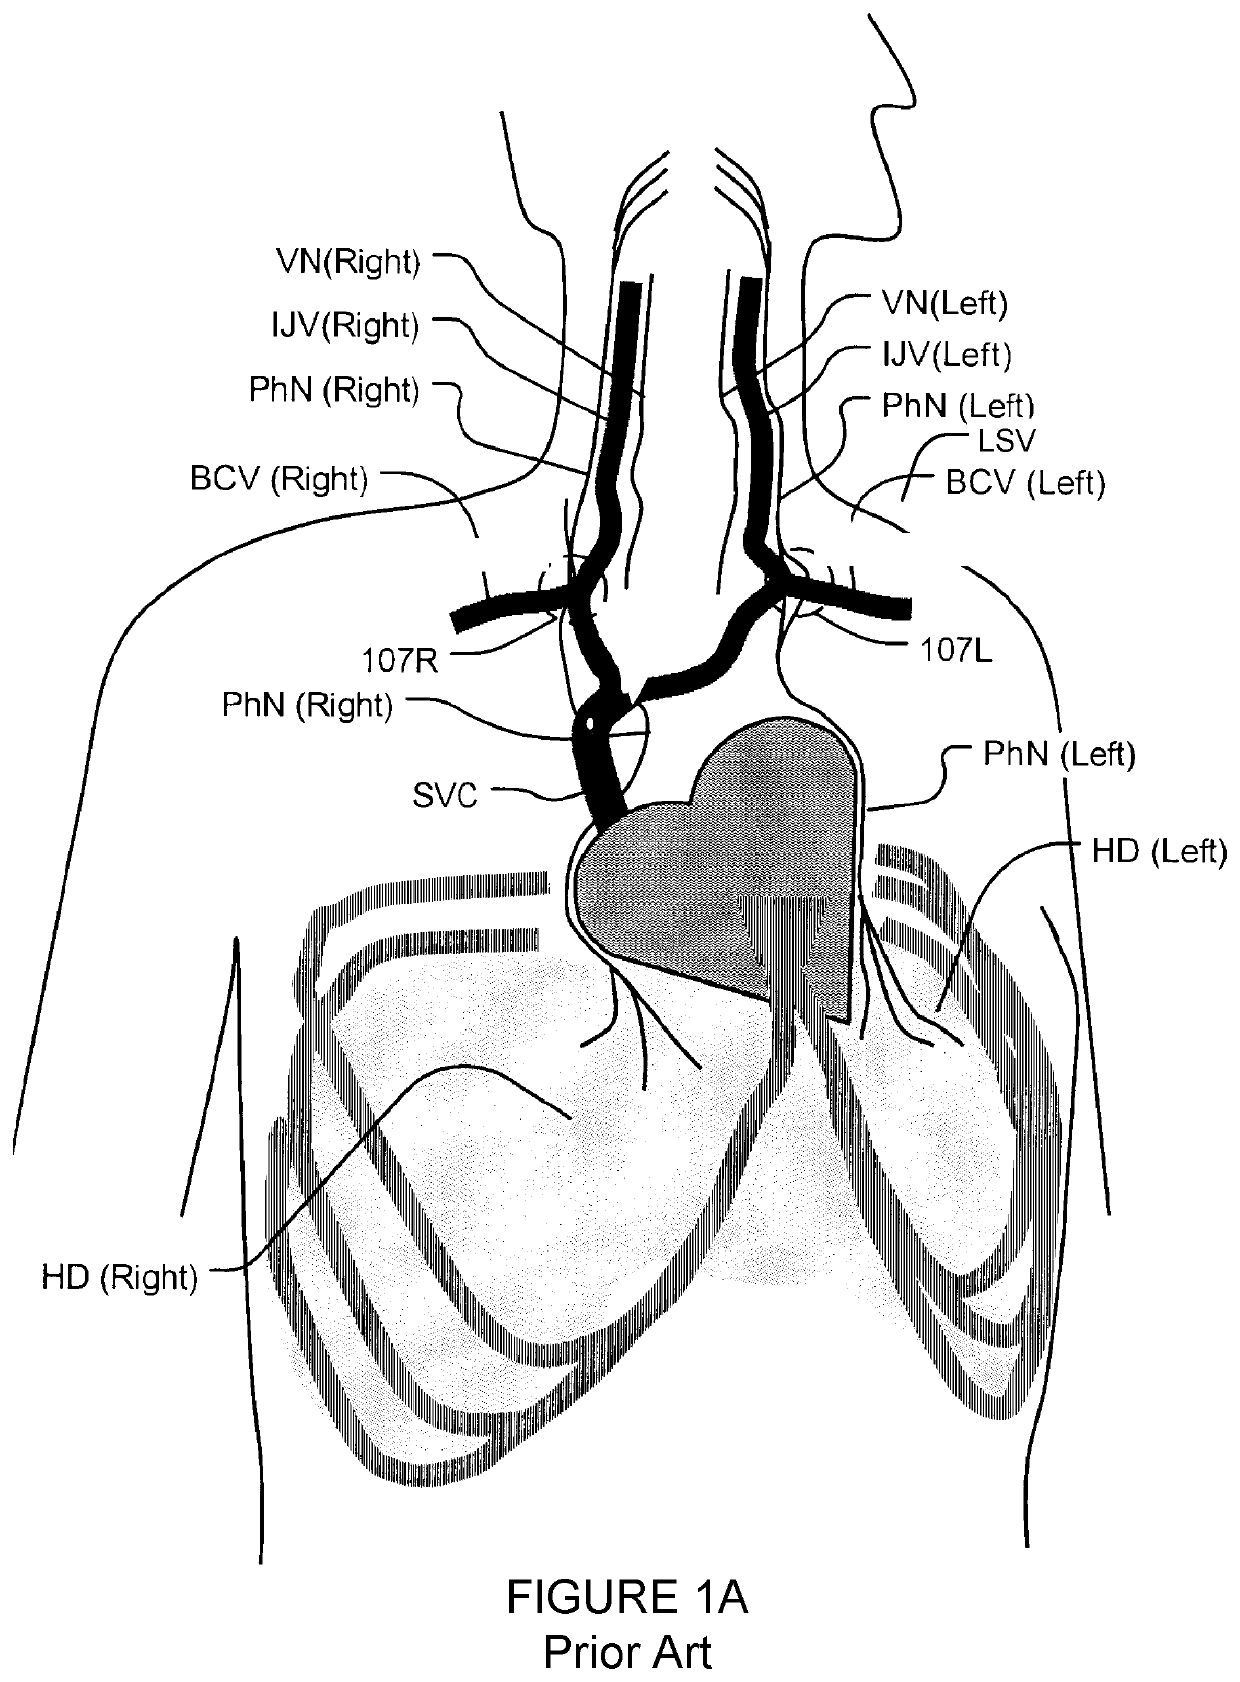 Transvascular nerve stimulation apparatus and methods